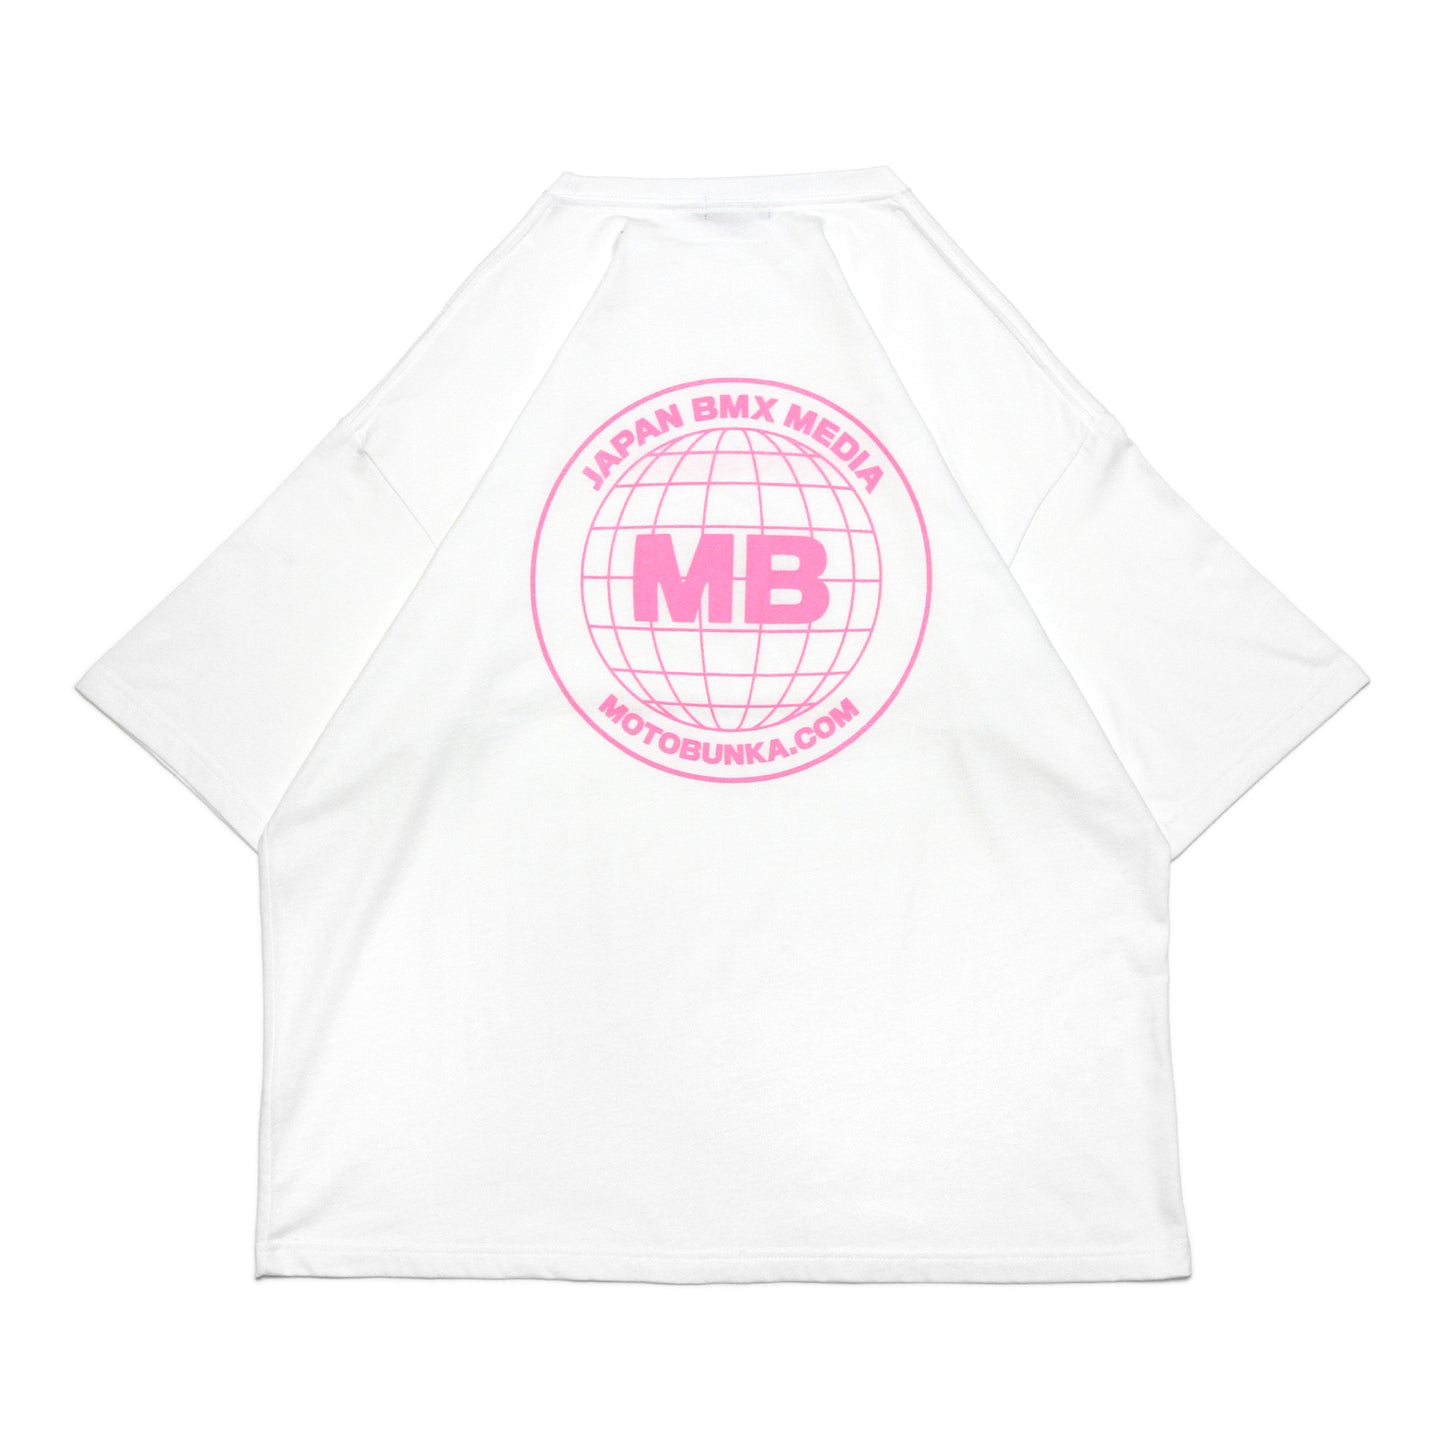 MOTO-BUNKA - 23 JBM T-Shirt/White-Pink